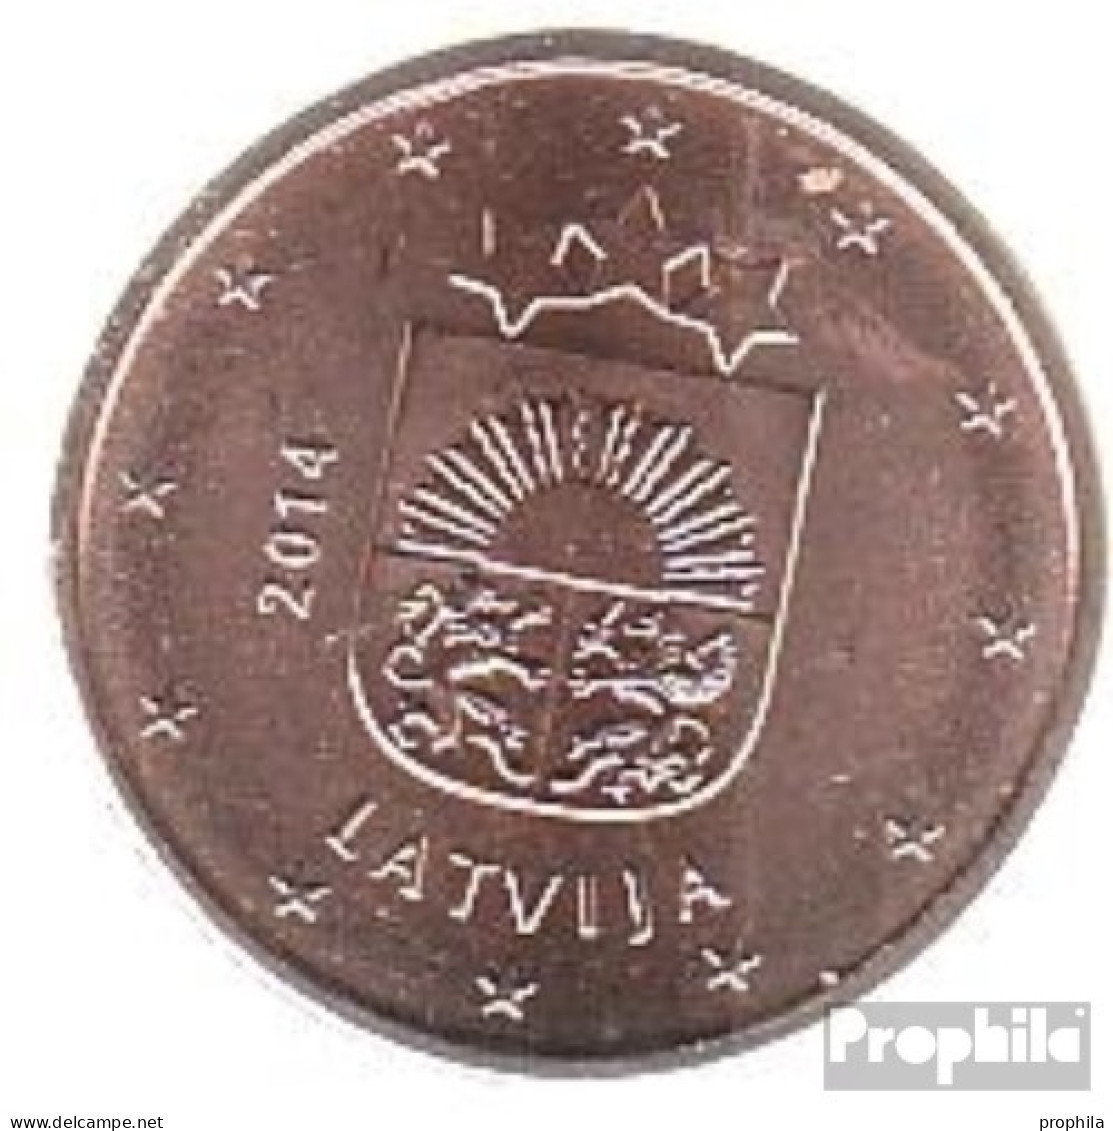 Lettland LET 1 2014 Stgl./unzirkuliert Stgl./unzirkuliert 2014 Kursmünze 1 Cent - Latvia